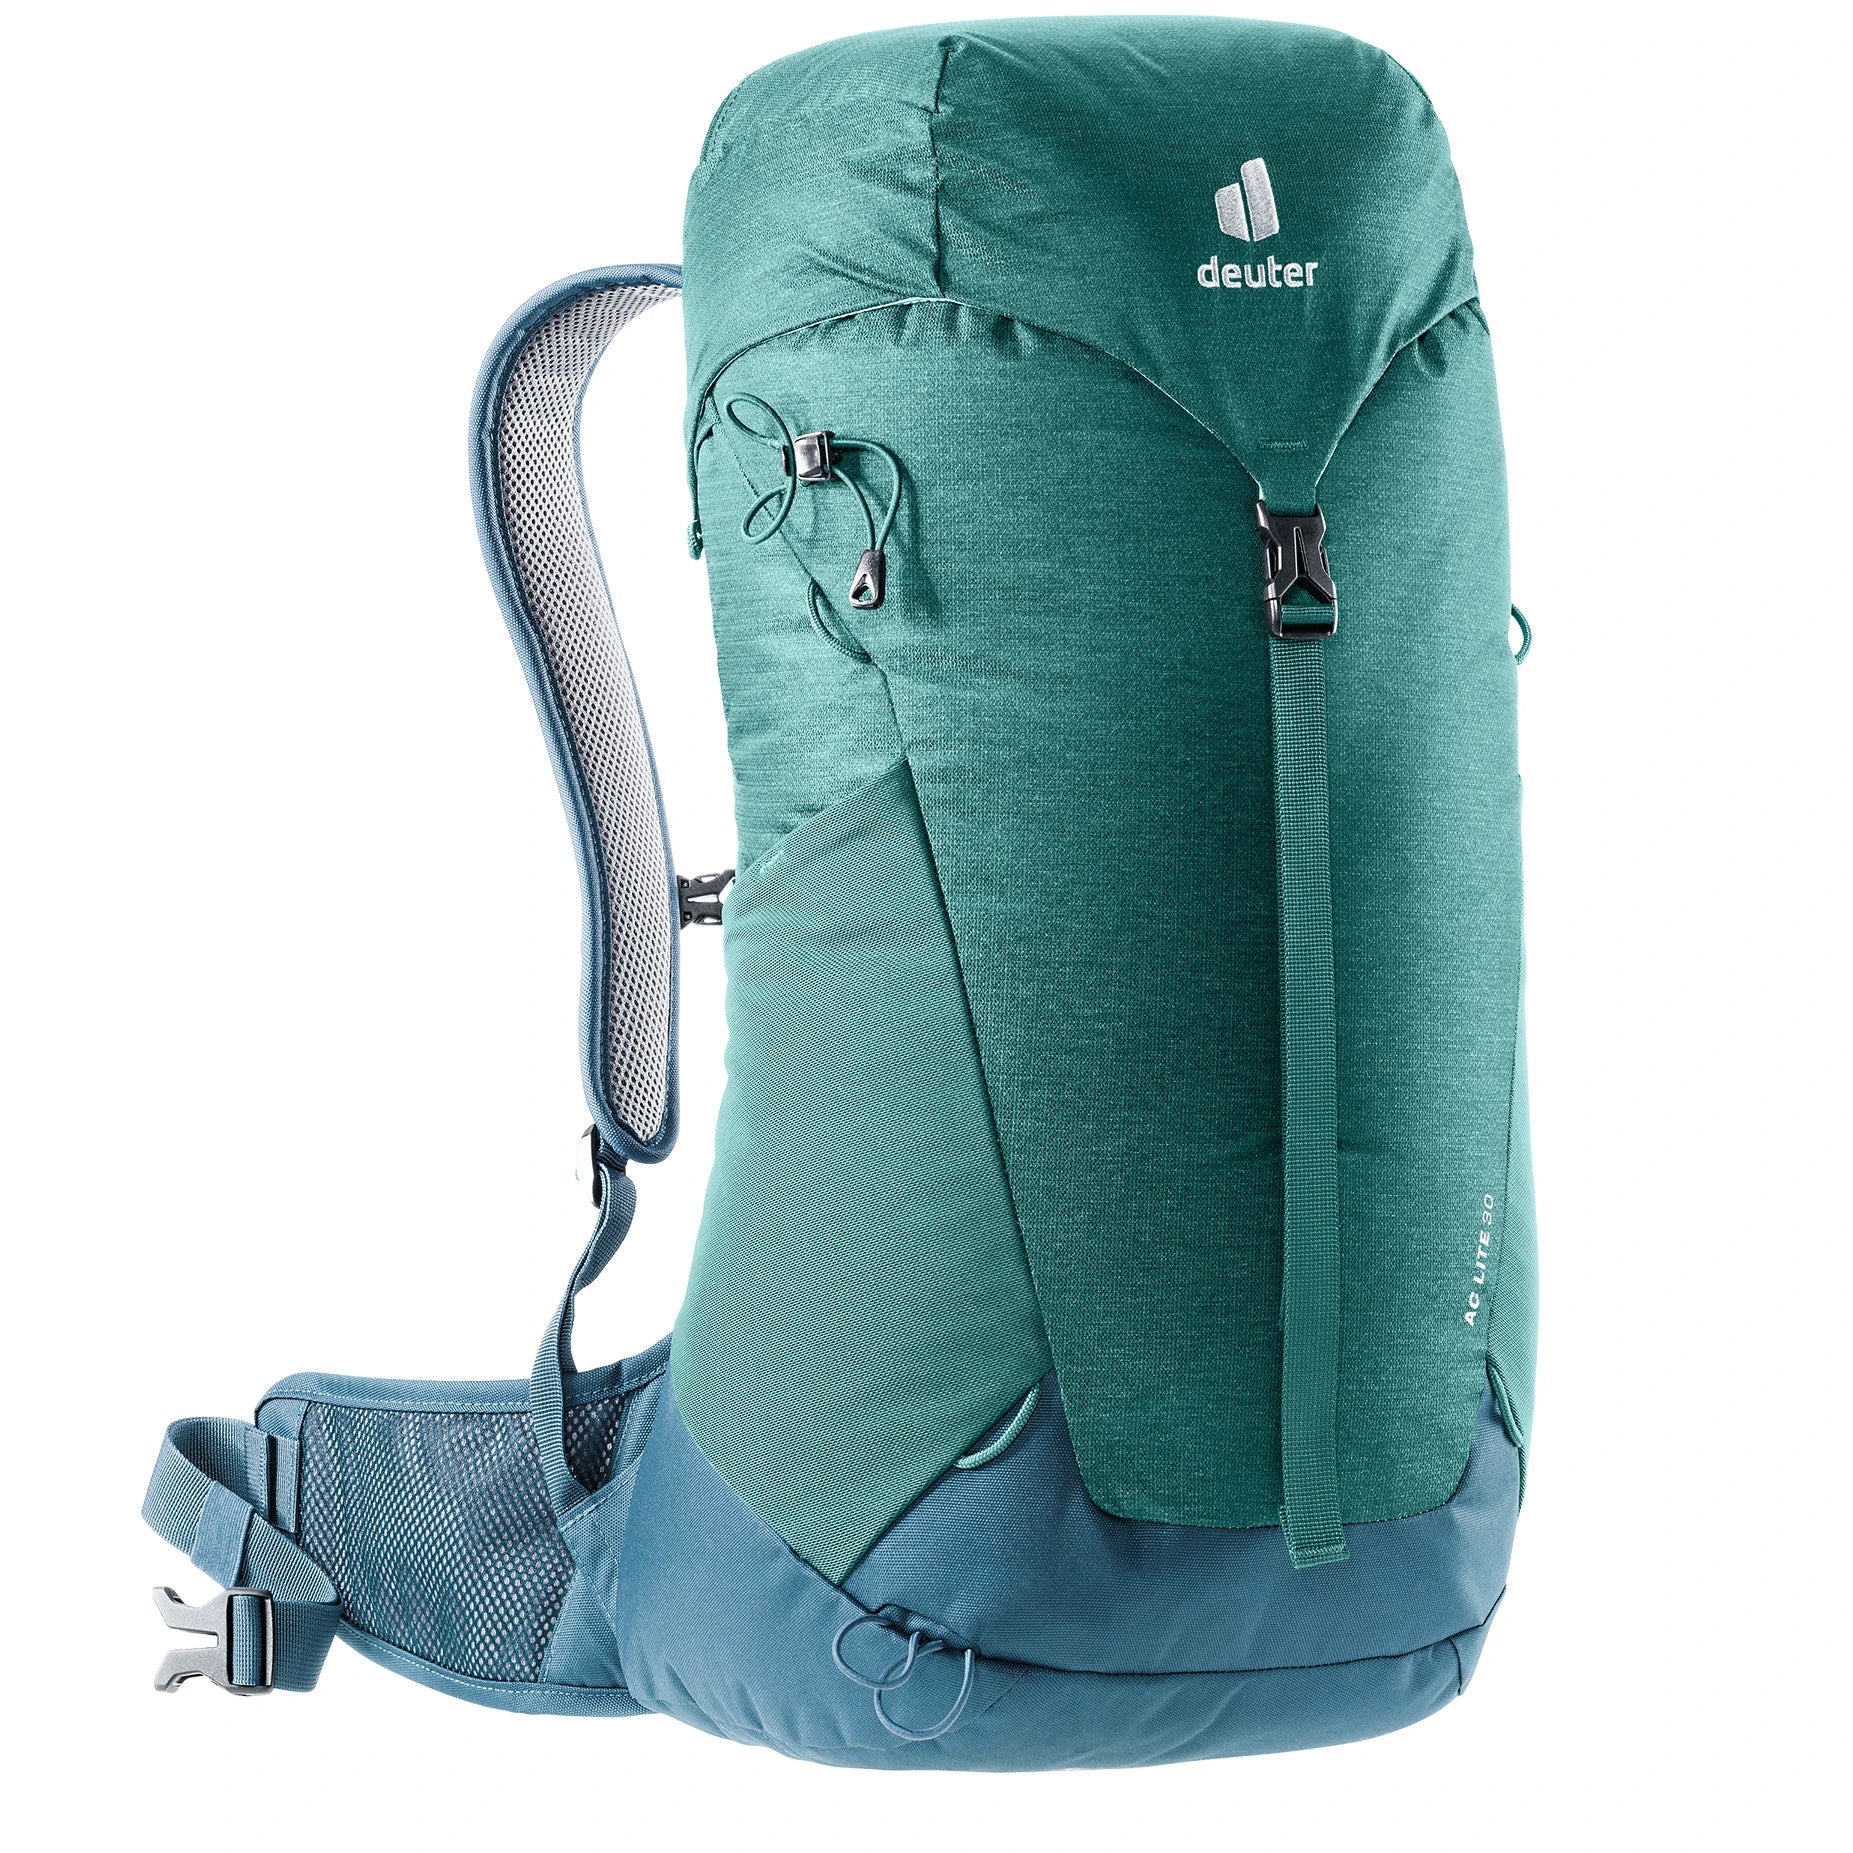 Deuter Travel AC Lite 30 hiking backpack 58 cm - alpinegreen-arctic